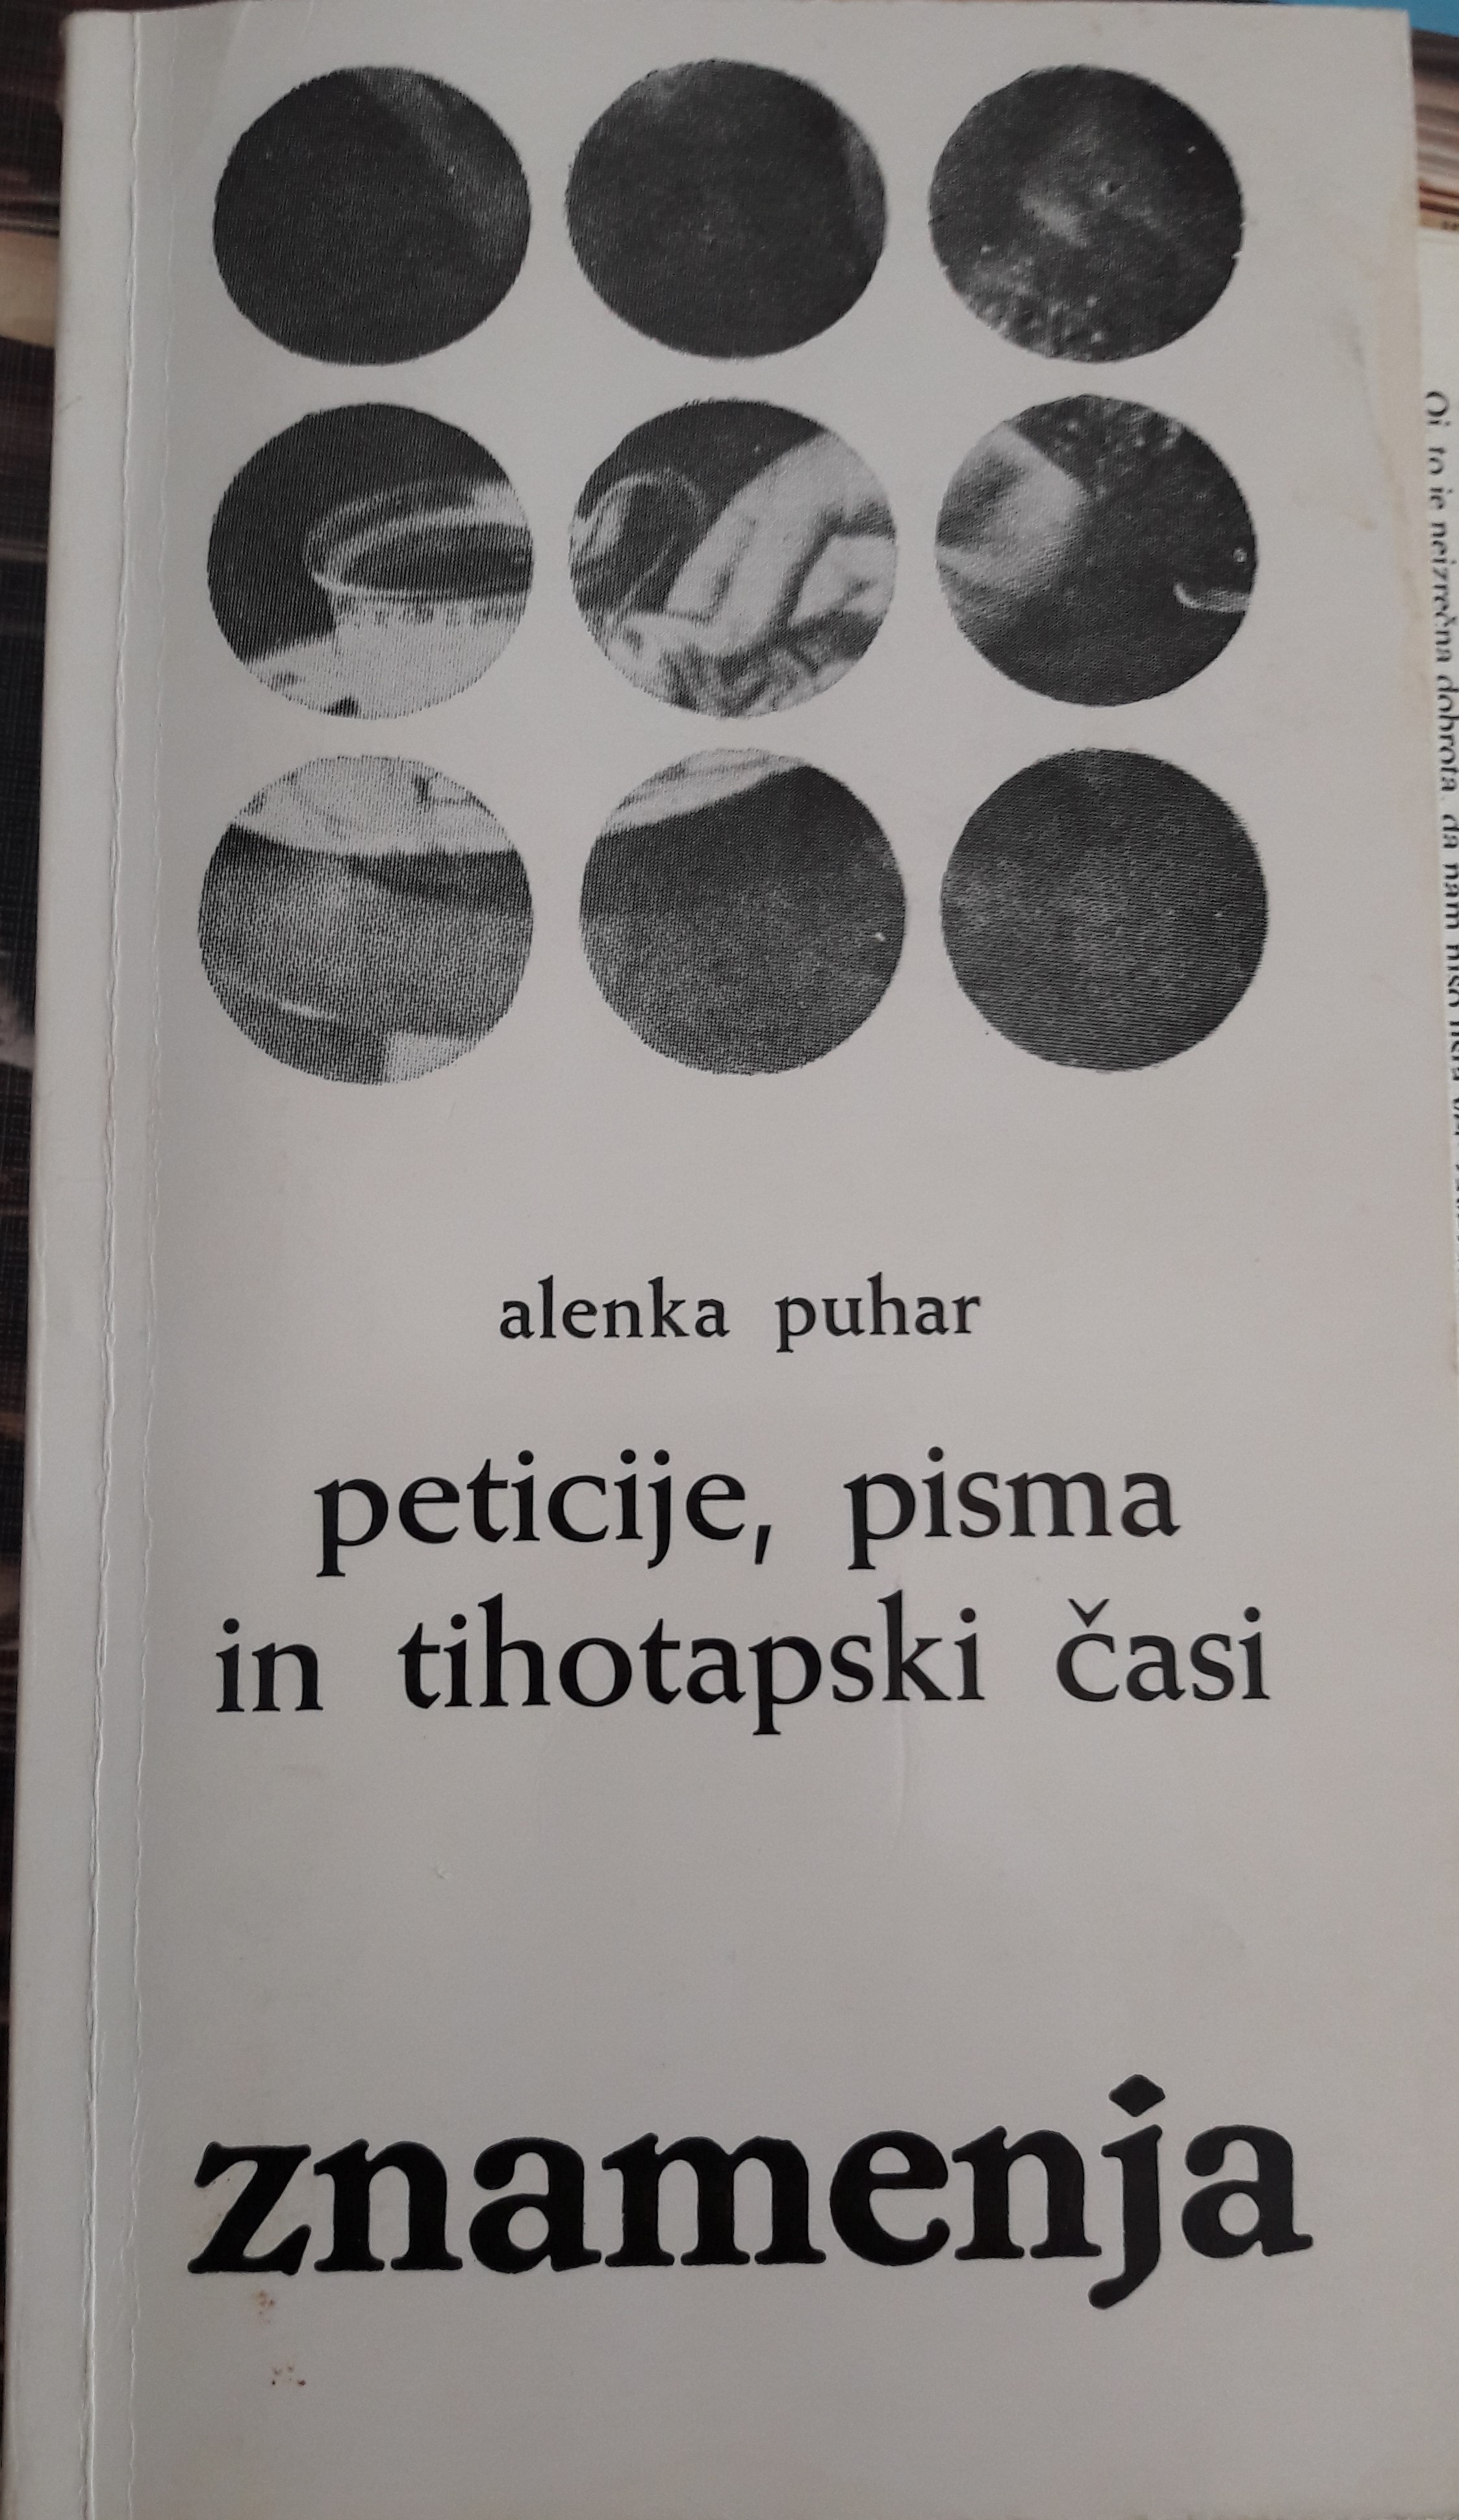 Publication: Alenka Puhar. Peticije, pisma in tihotapski časi (Petitions, Letters and a Time of Smuggling). Maribor, 1985. 